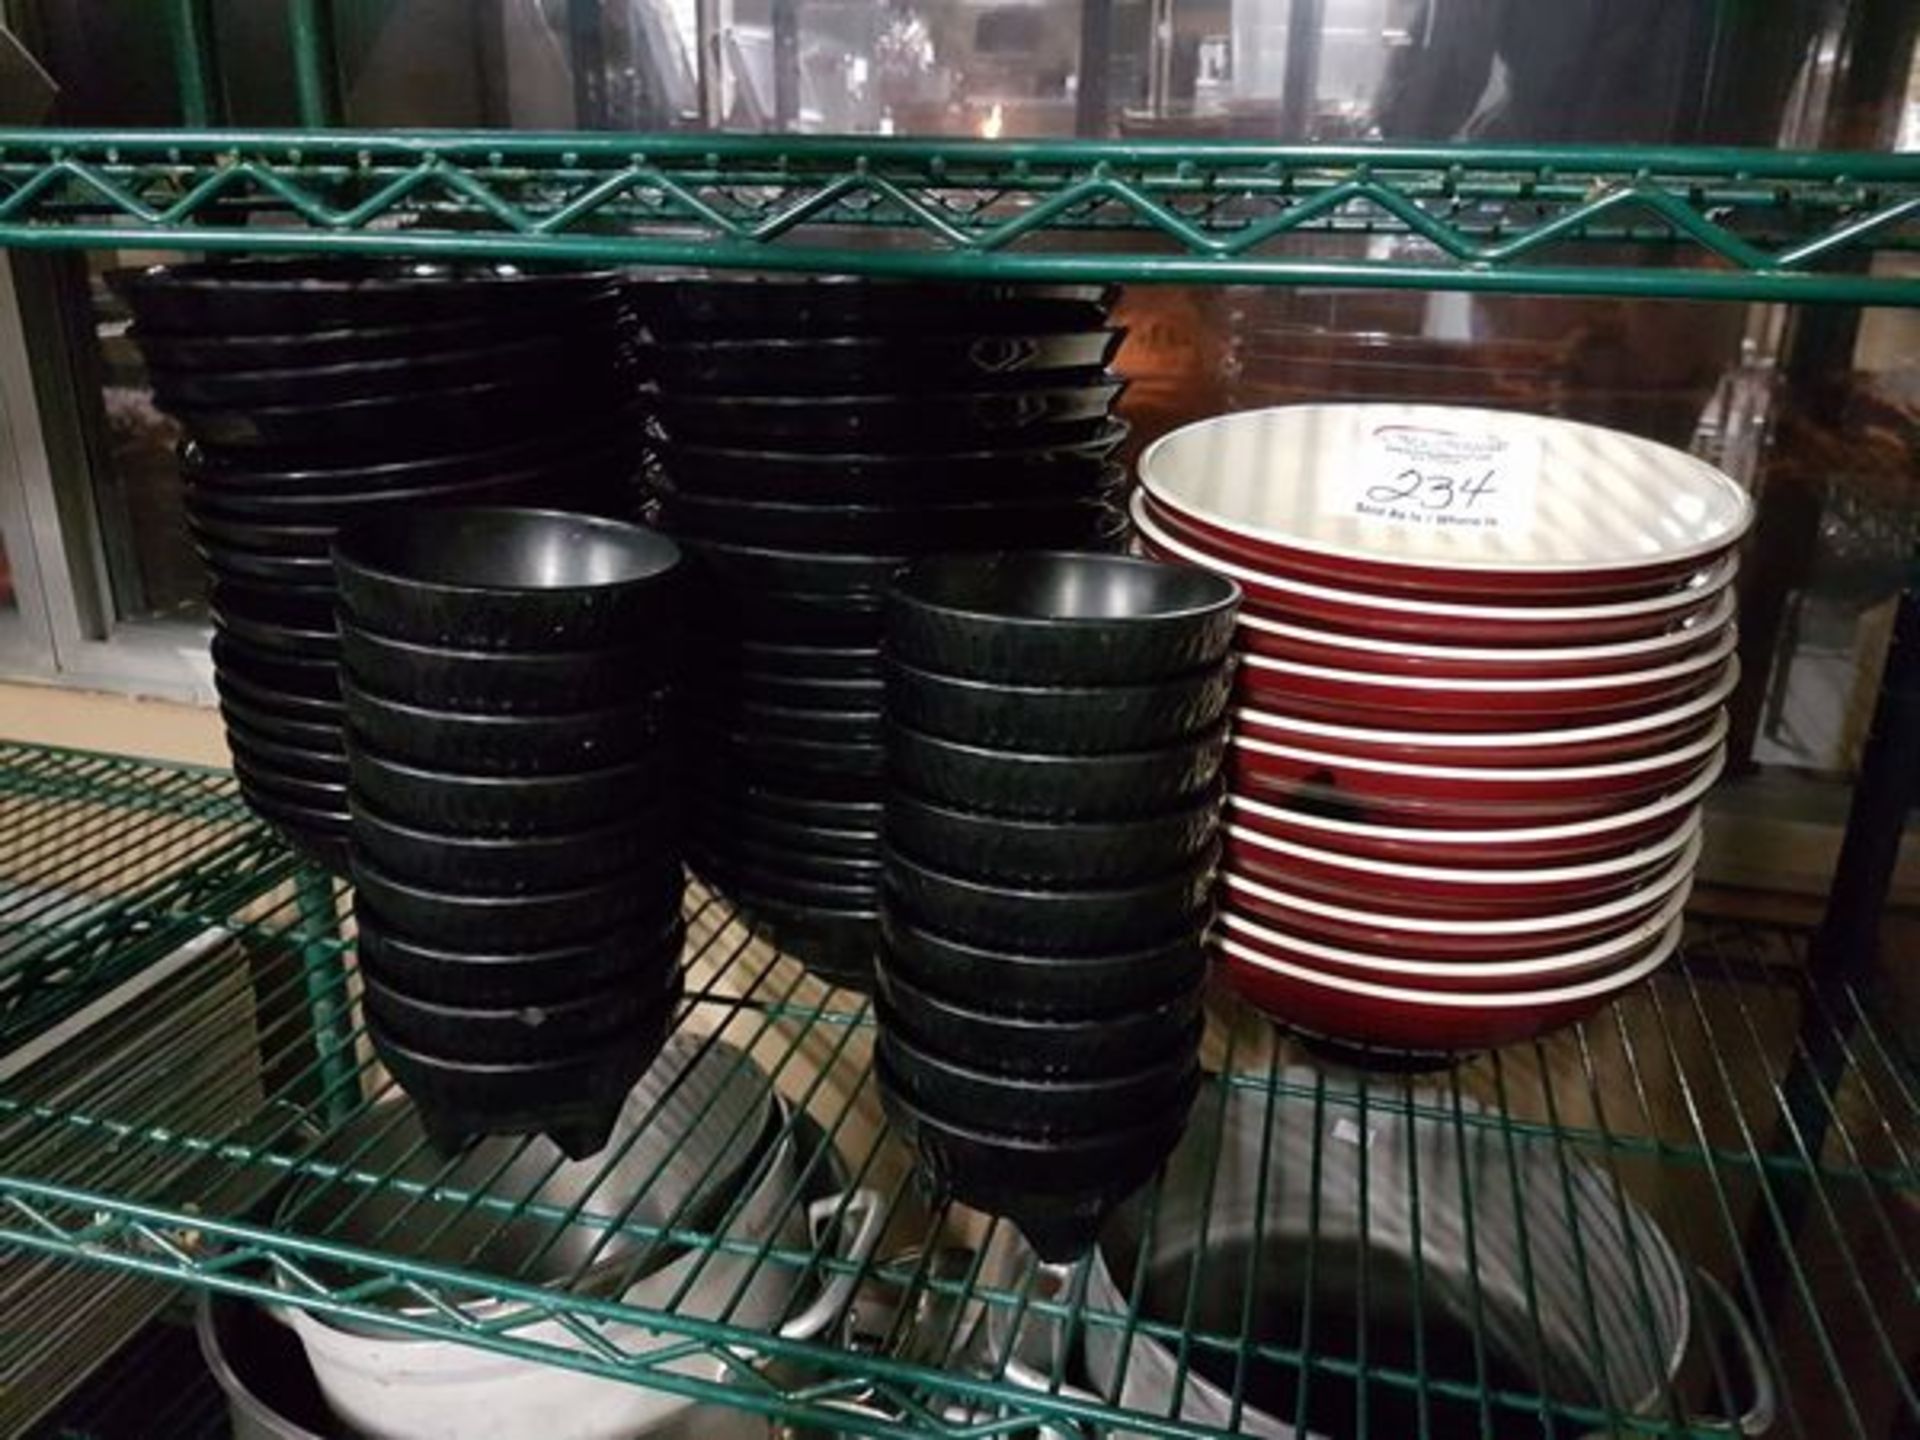 Approx. 60 Large Ceramic Soup Bowls